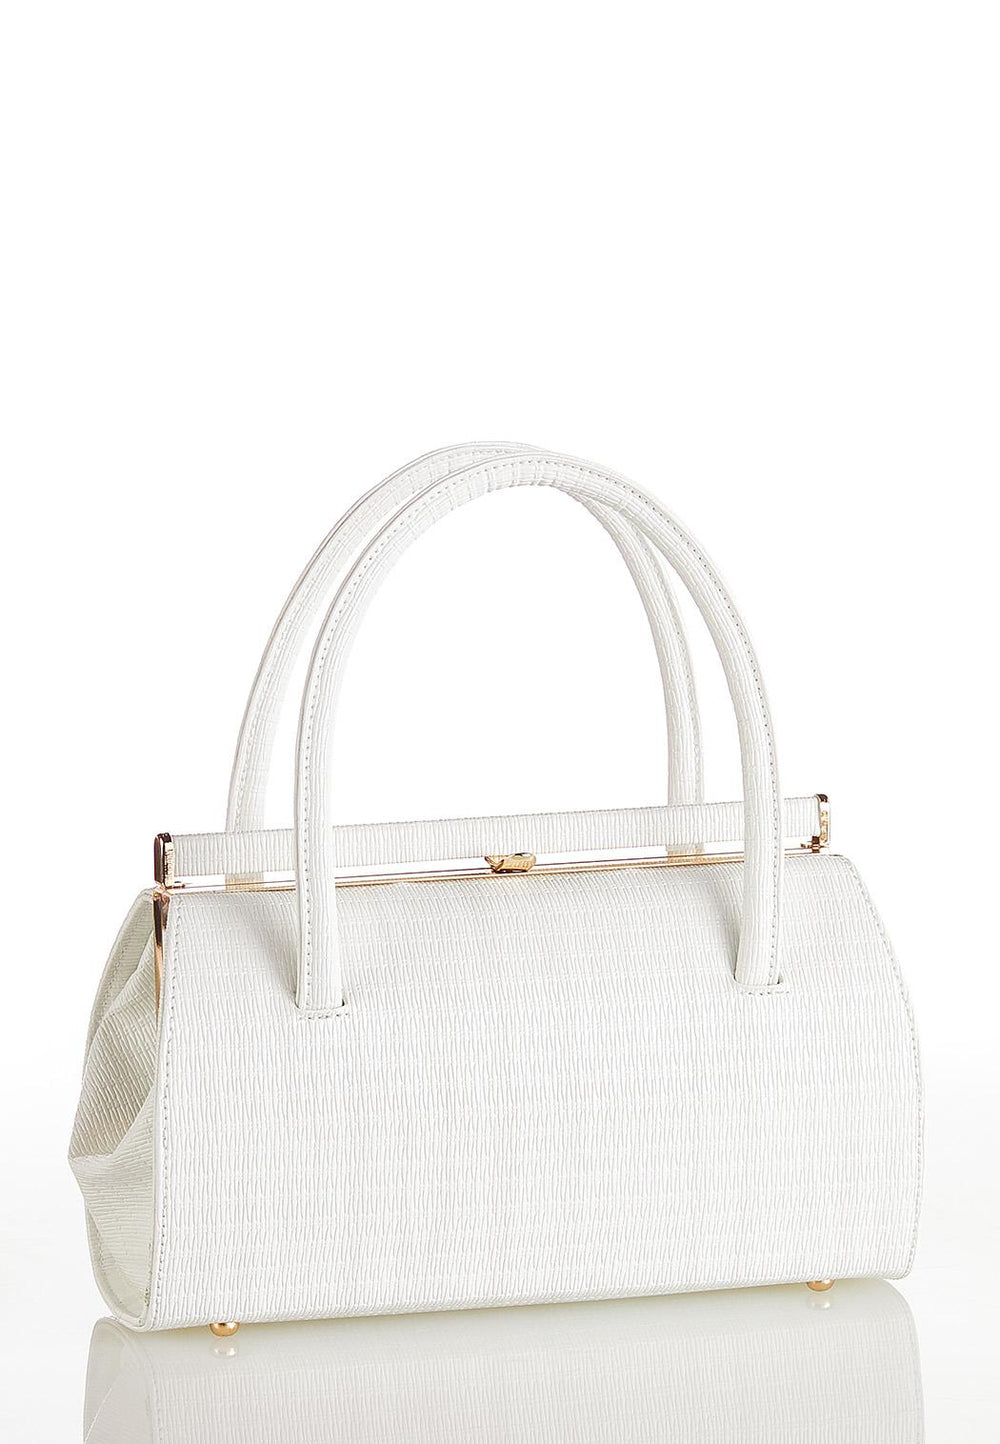 cato fashions handbags - Online Discount -